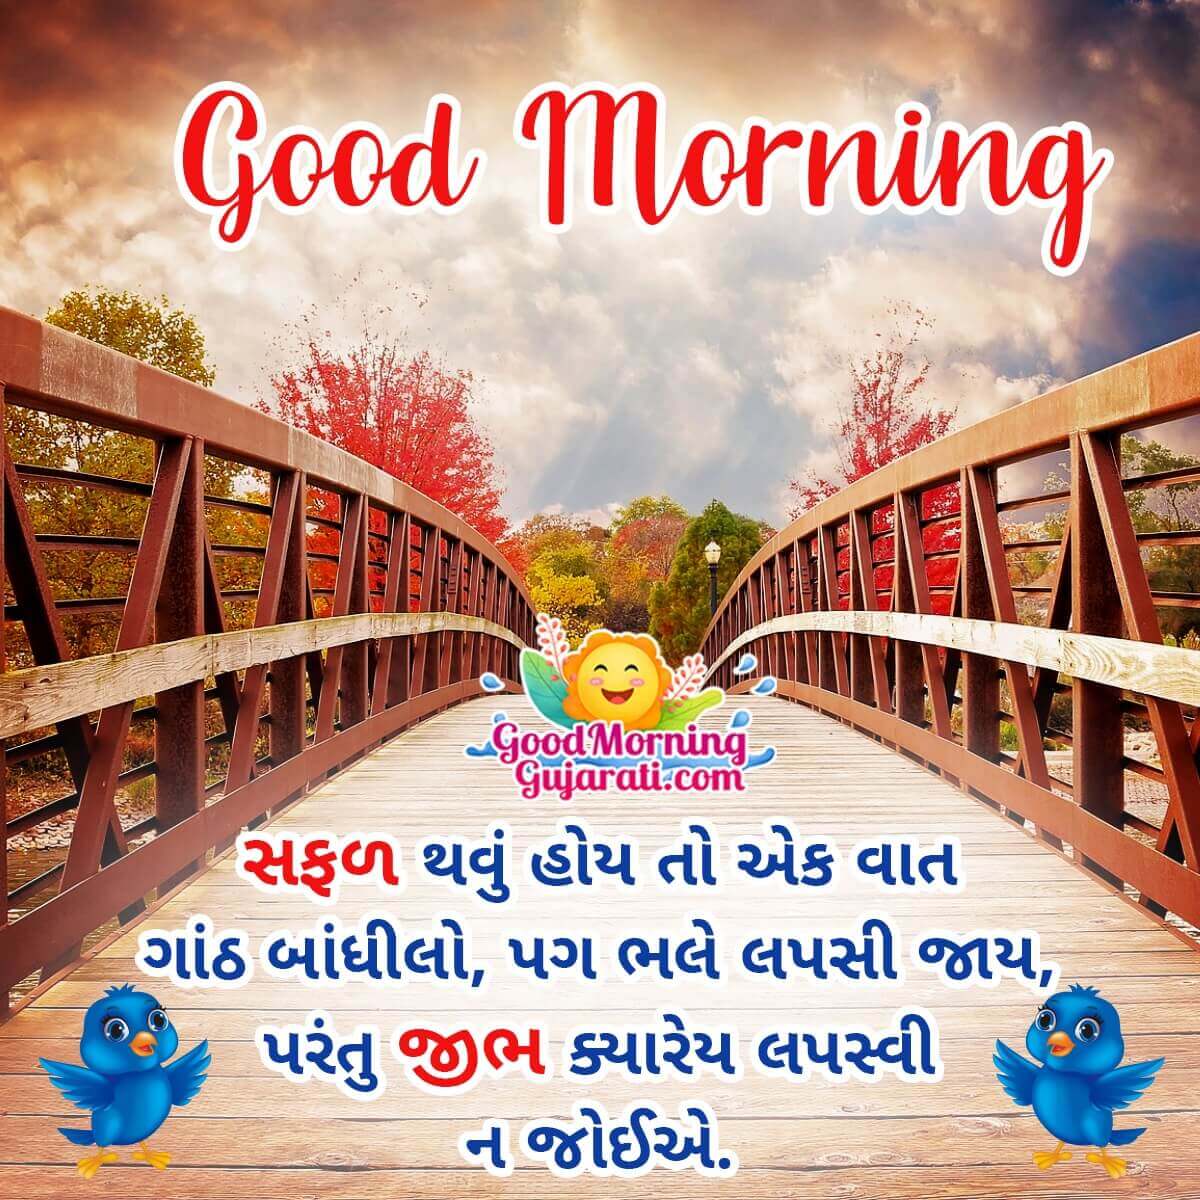 Gujarati Morning Thoughts Image